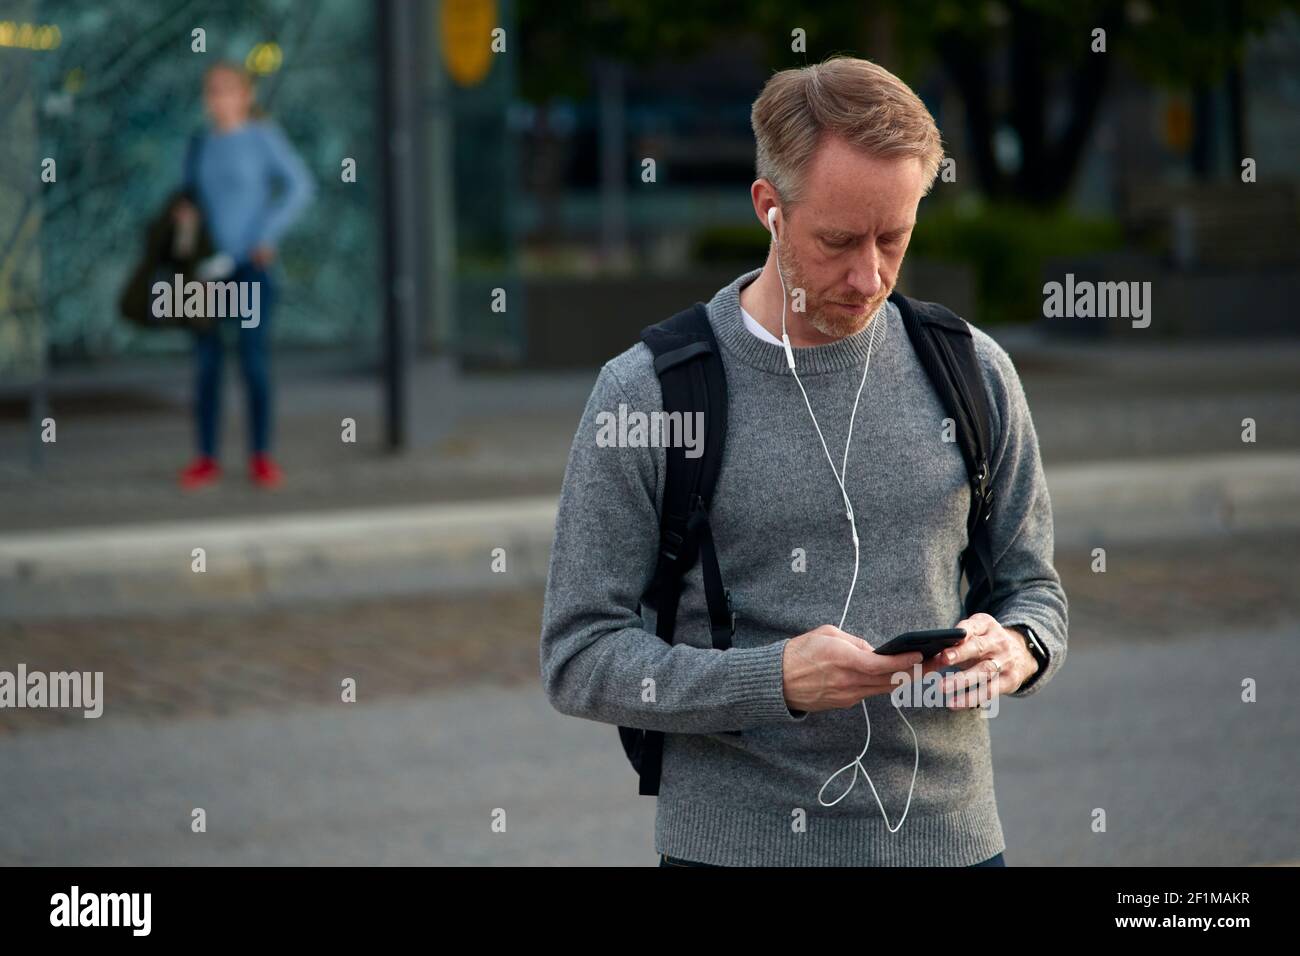 Man on street holding phone Stock Photo